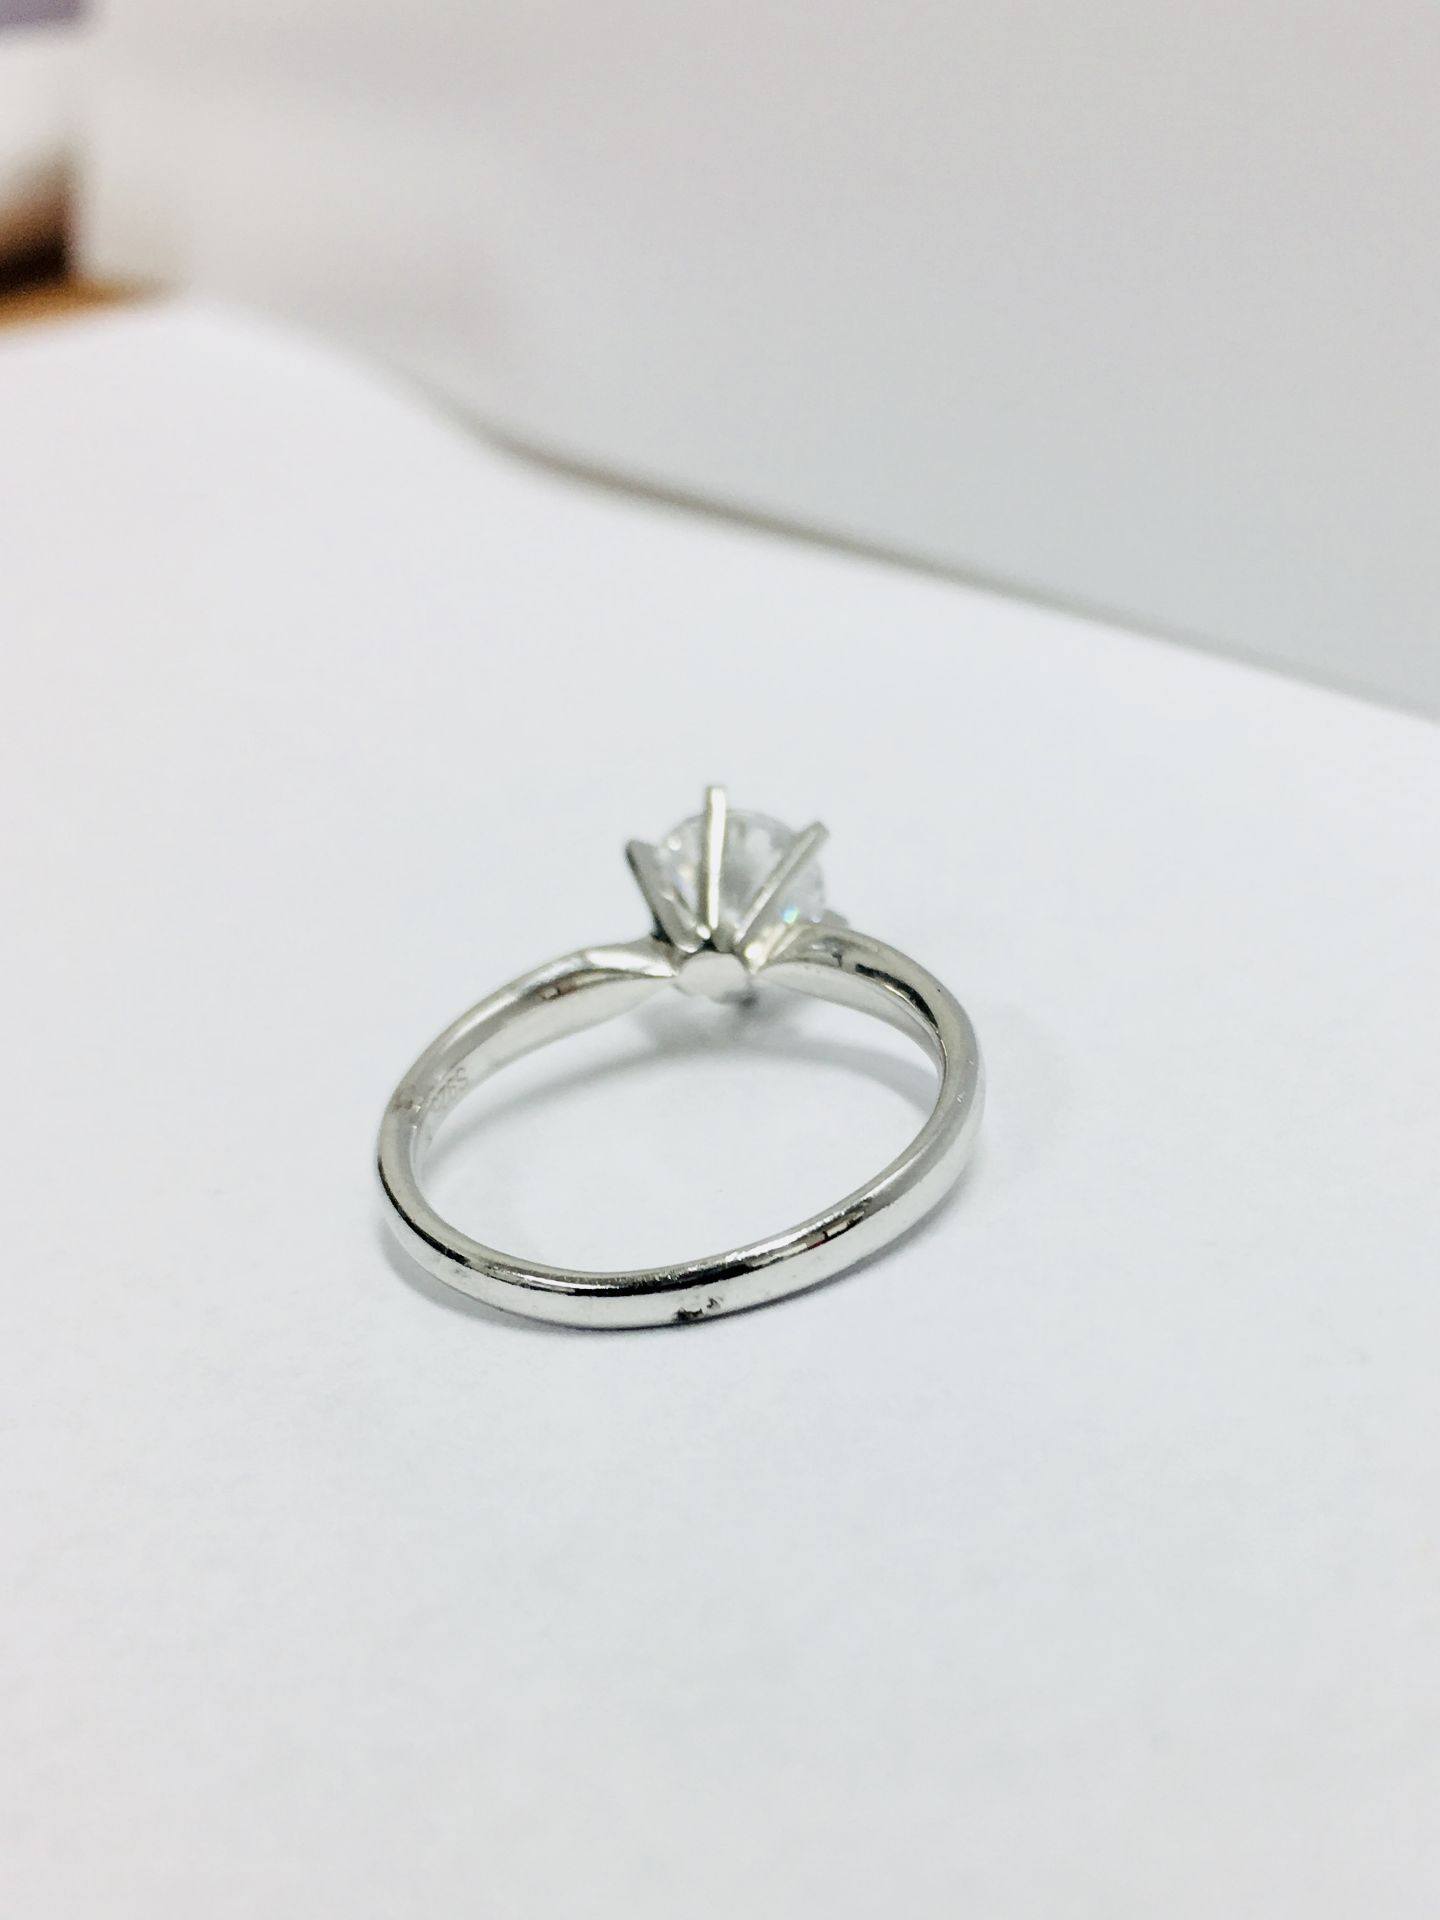 Platinum diamond solitaire ring 6 claw,0.50ct brilliant cut diamond h colour vs clarity enhanced,3. - Image 3 of 3